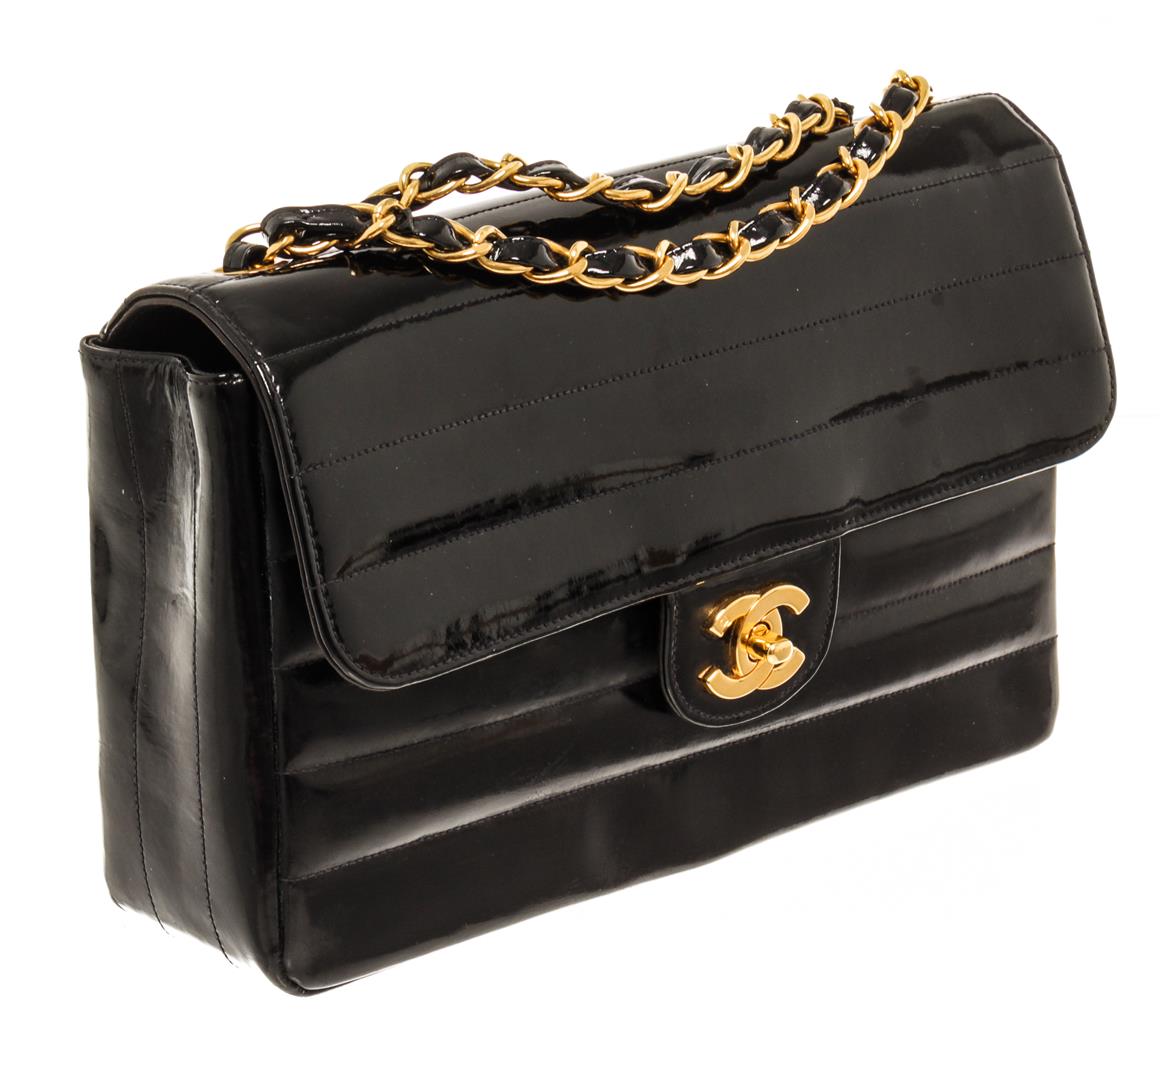 Chanel Black Horizontal Patent Leather Flap Bag